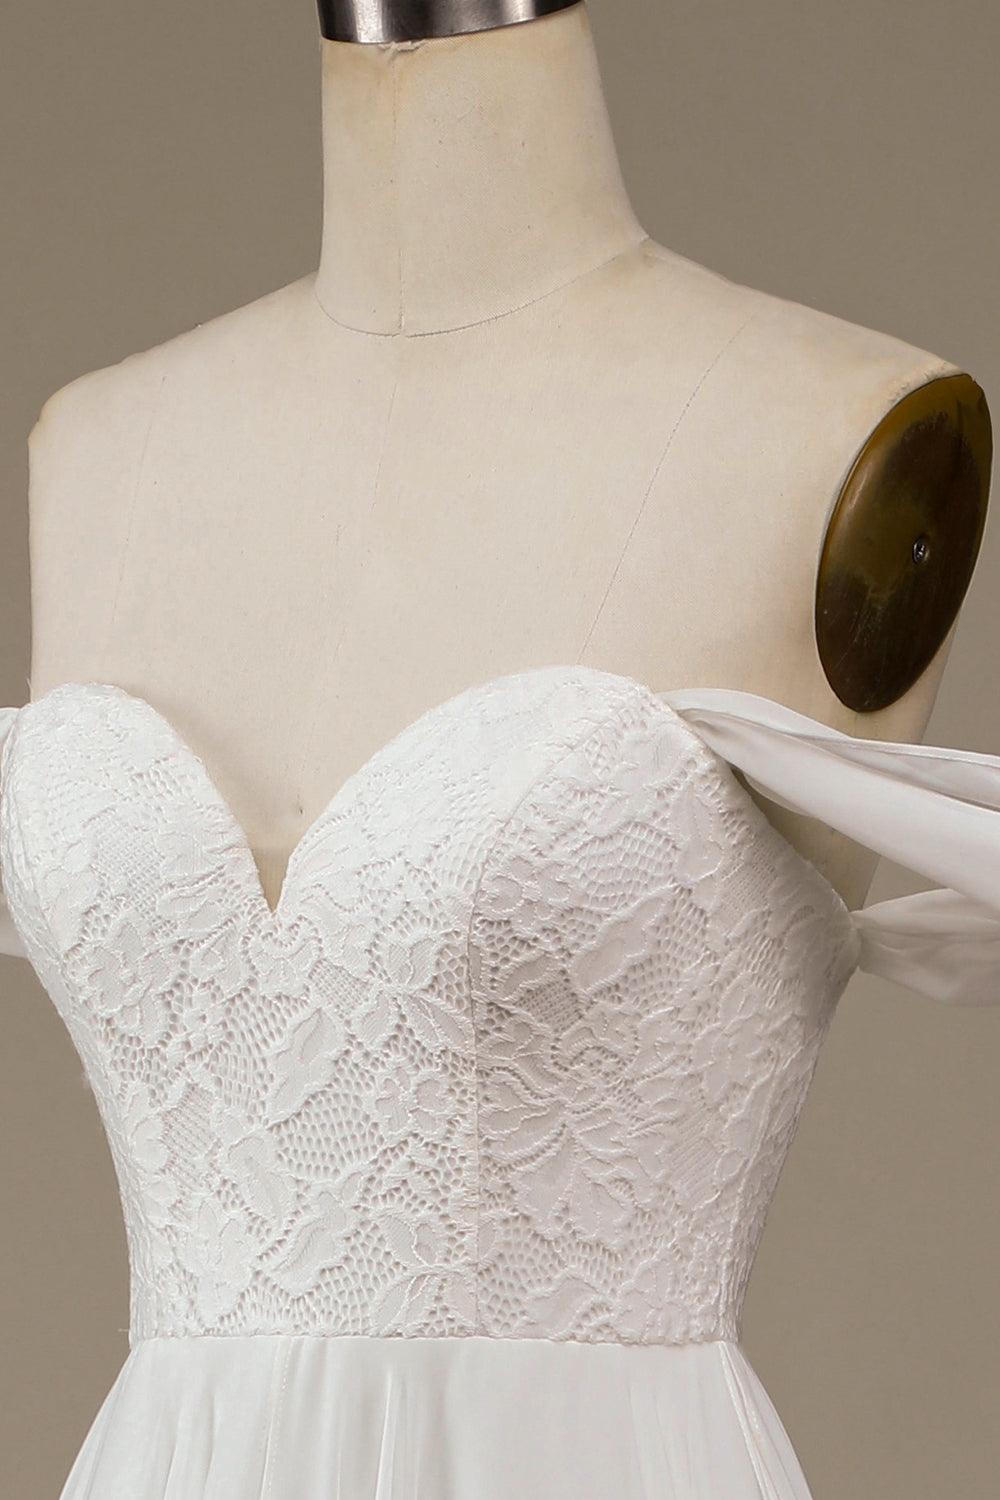 Ivory Asymmetrical Boho Chiffon Wedding Dress with Lace